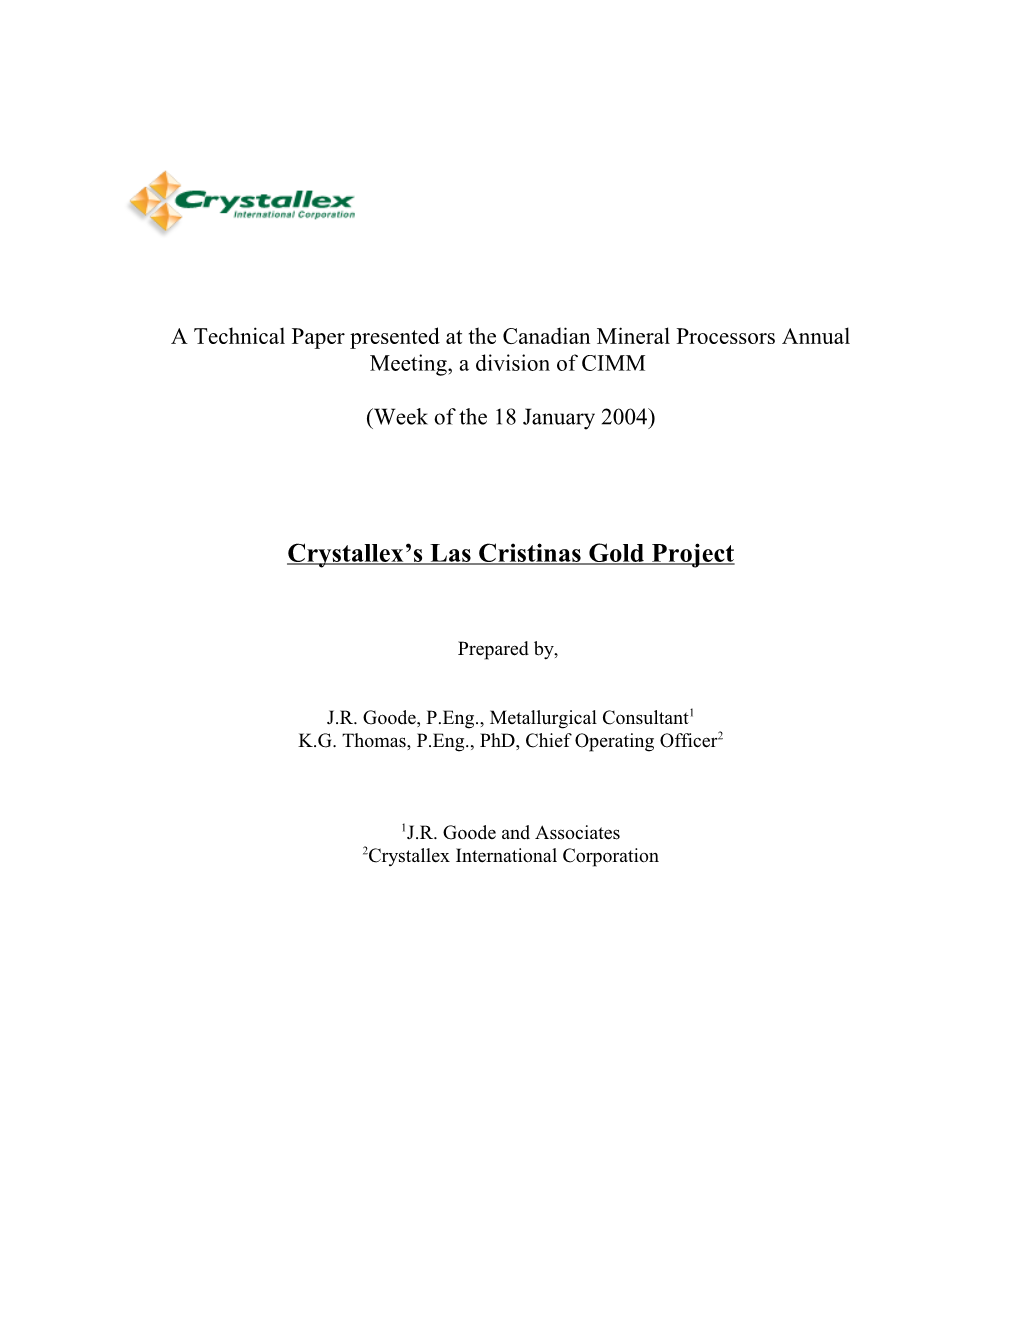 Crystallex S Las Cristinas Gold Project